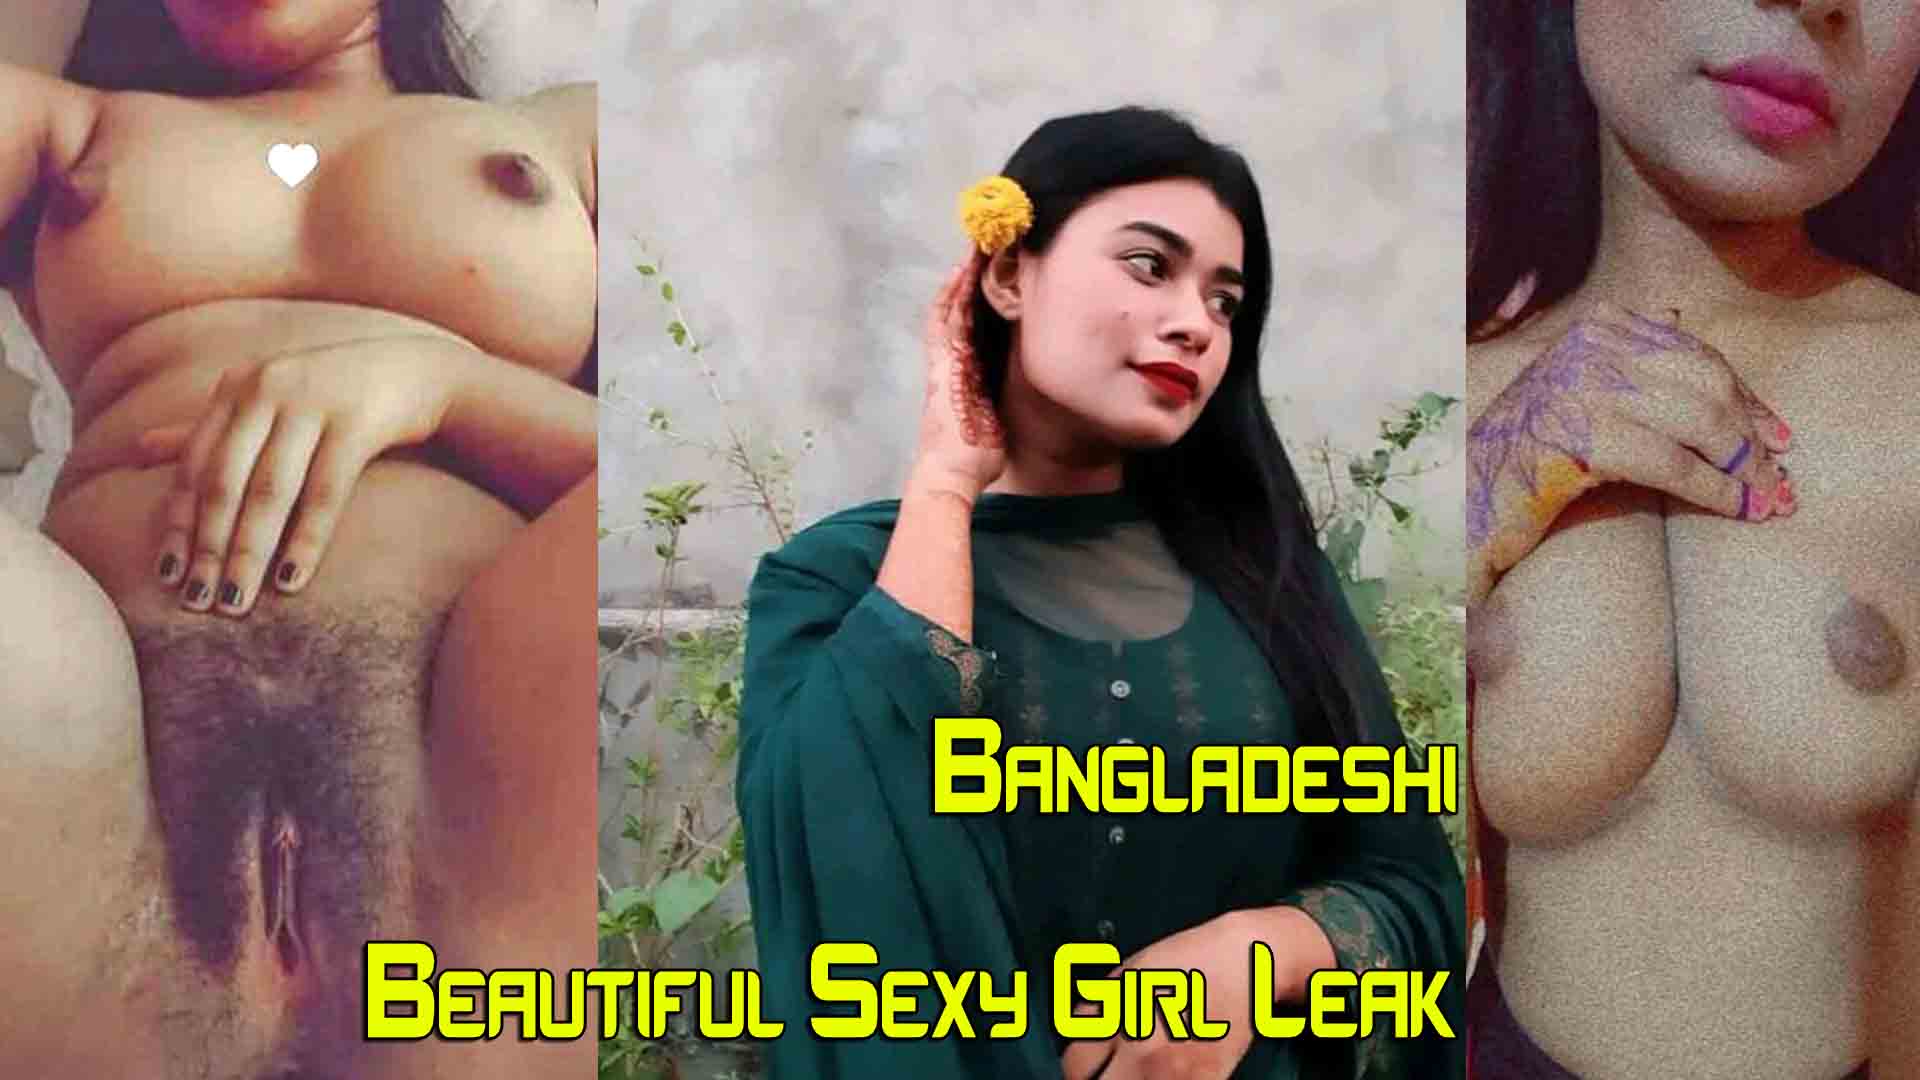 Bangladeshi Beautiful Sexy Girl Leak